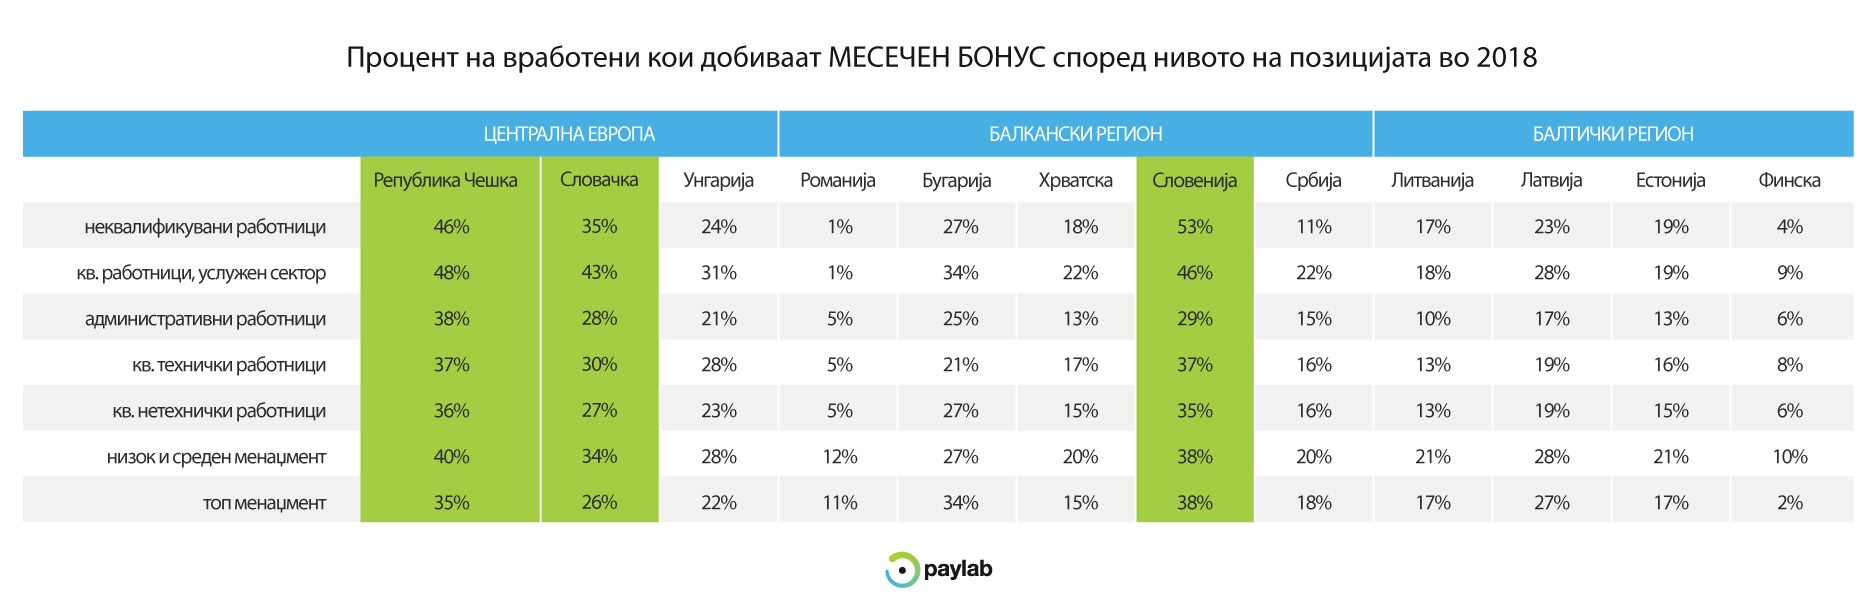 Macedonia moja plata paylab how many employees do receive monthly bonuses